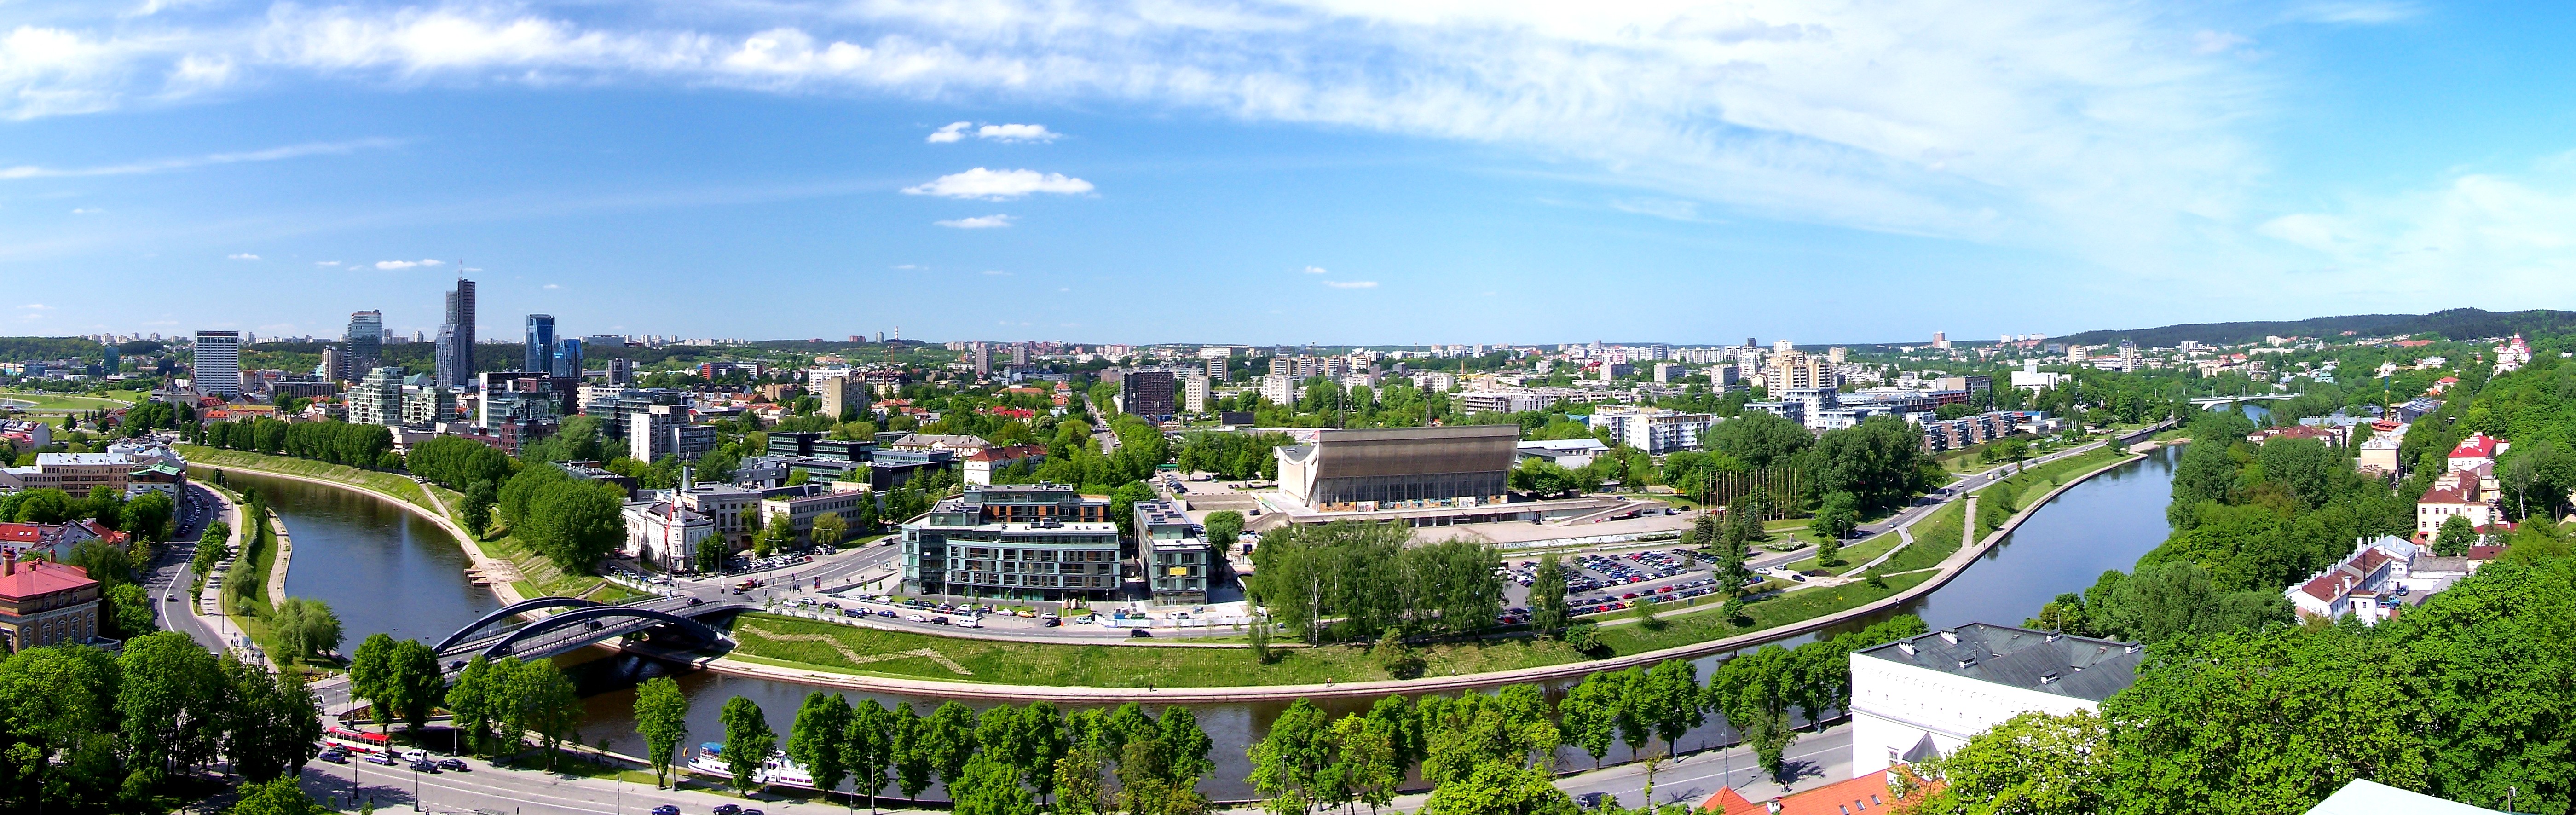 File:Vilnius - Panorama 01.jpg - Wikimedia Commons